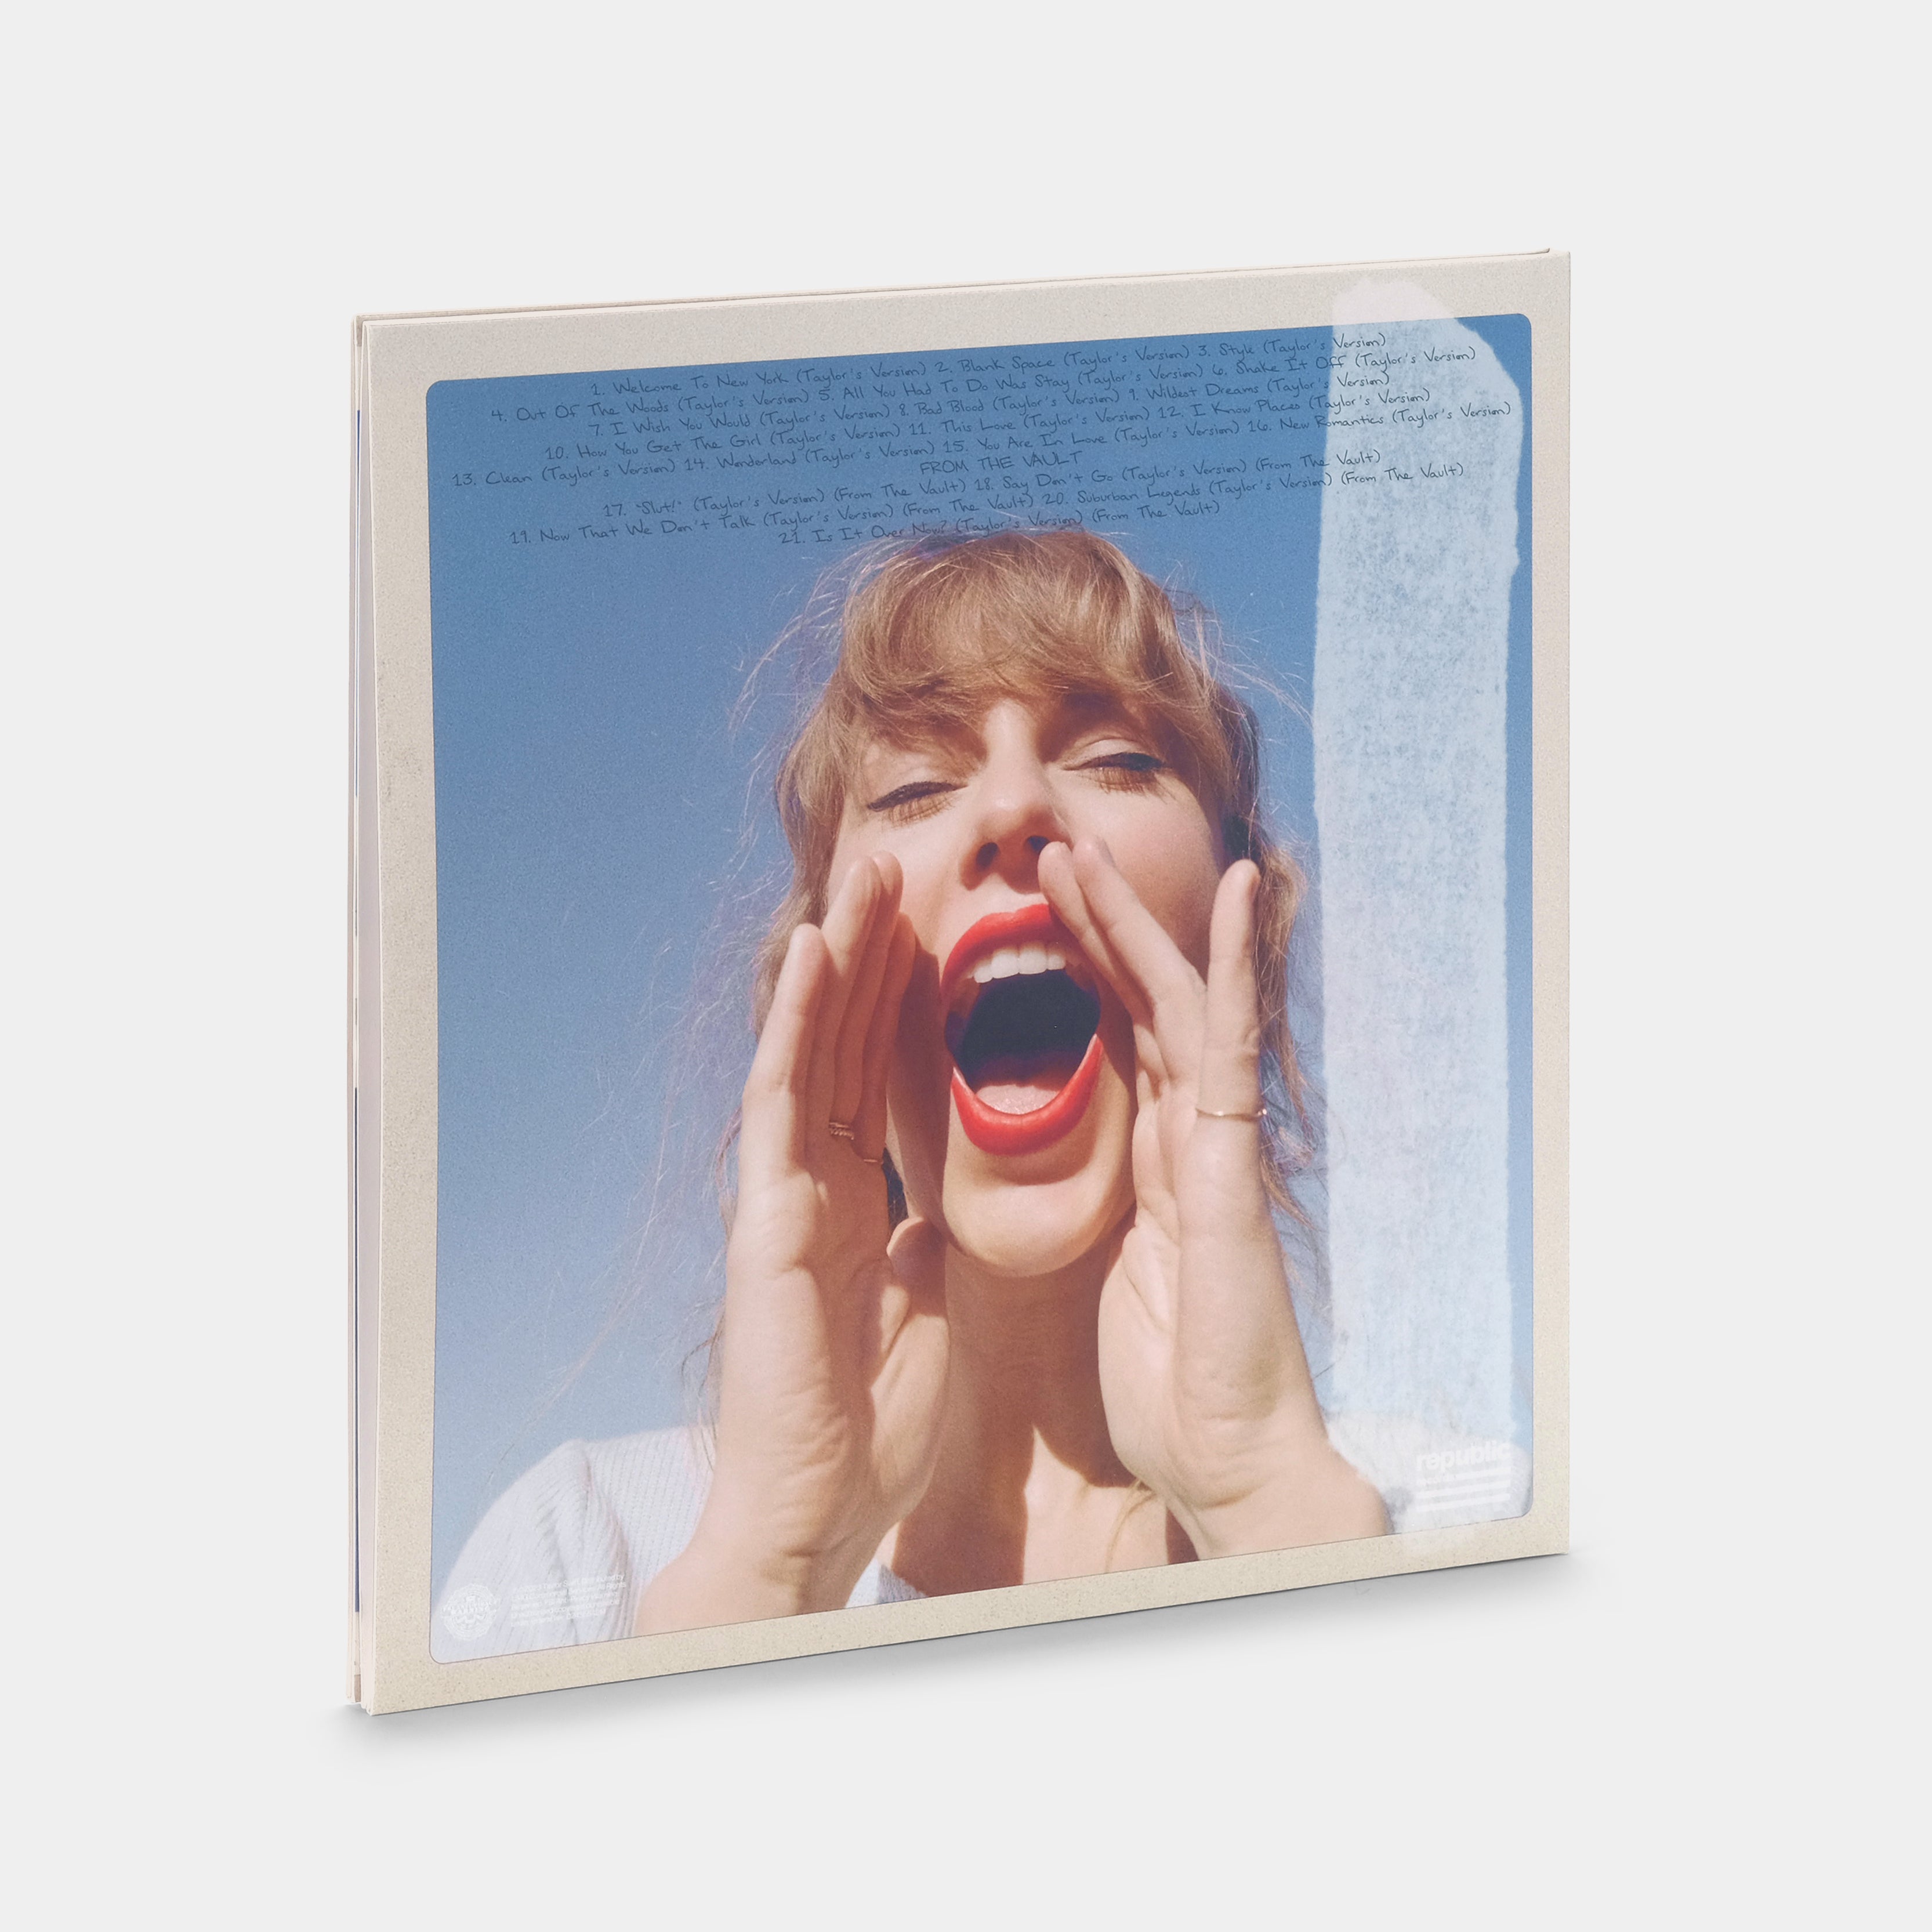 Taylor Swift - 1989 (Taylor's Version) 2xLP Crystal Skies Blue Vinyl Record